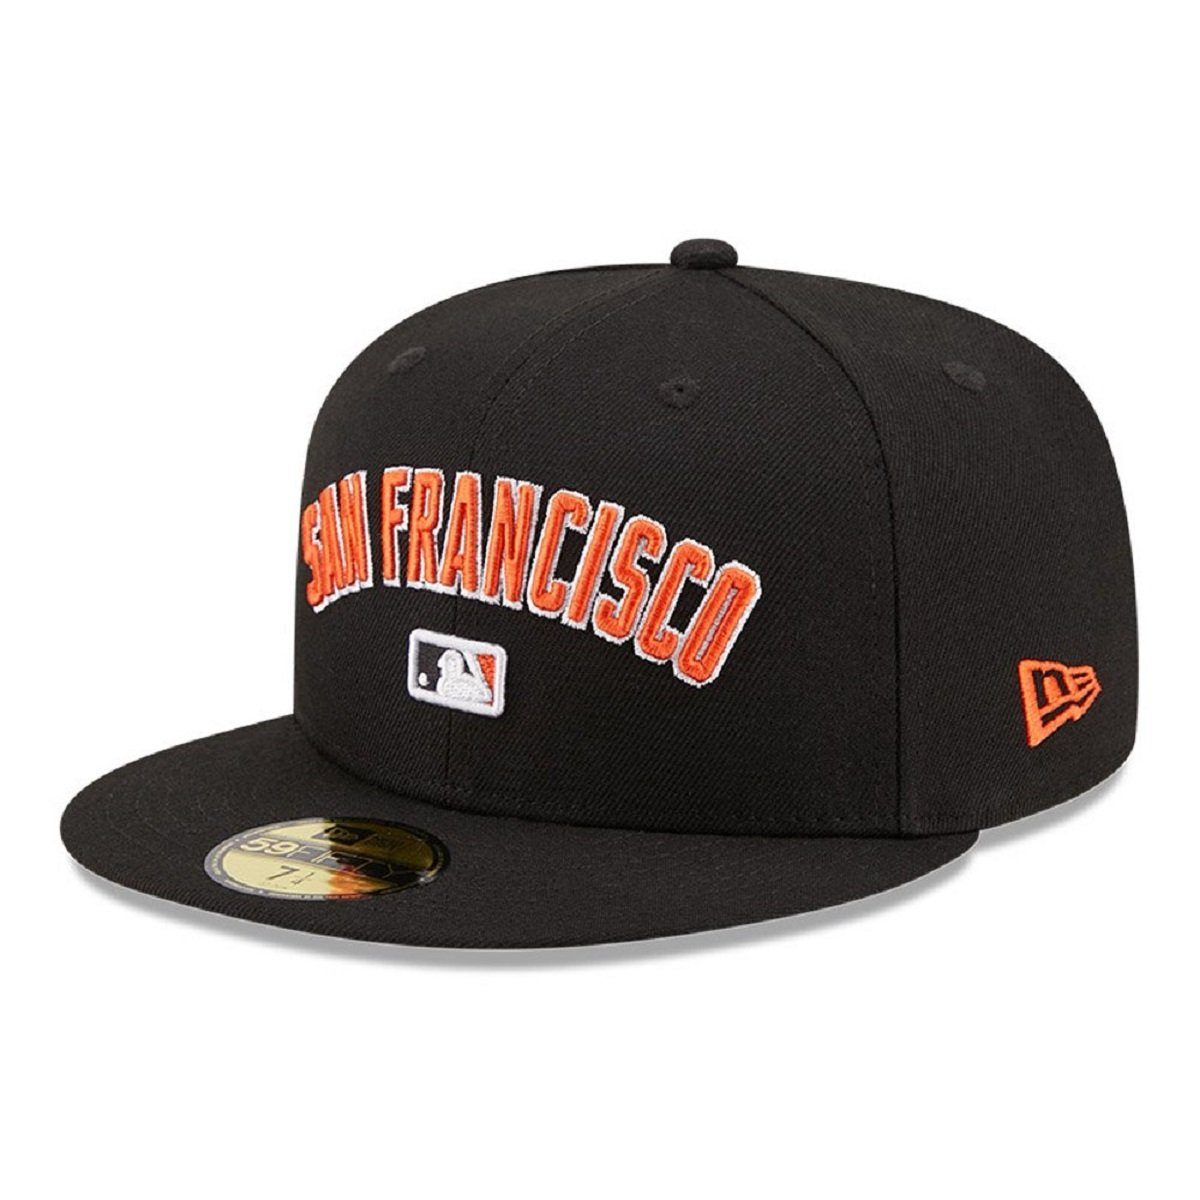 New Era Fitted Cap San Francisco Giants MLB Team